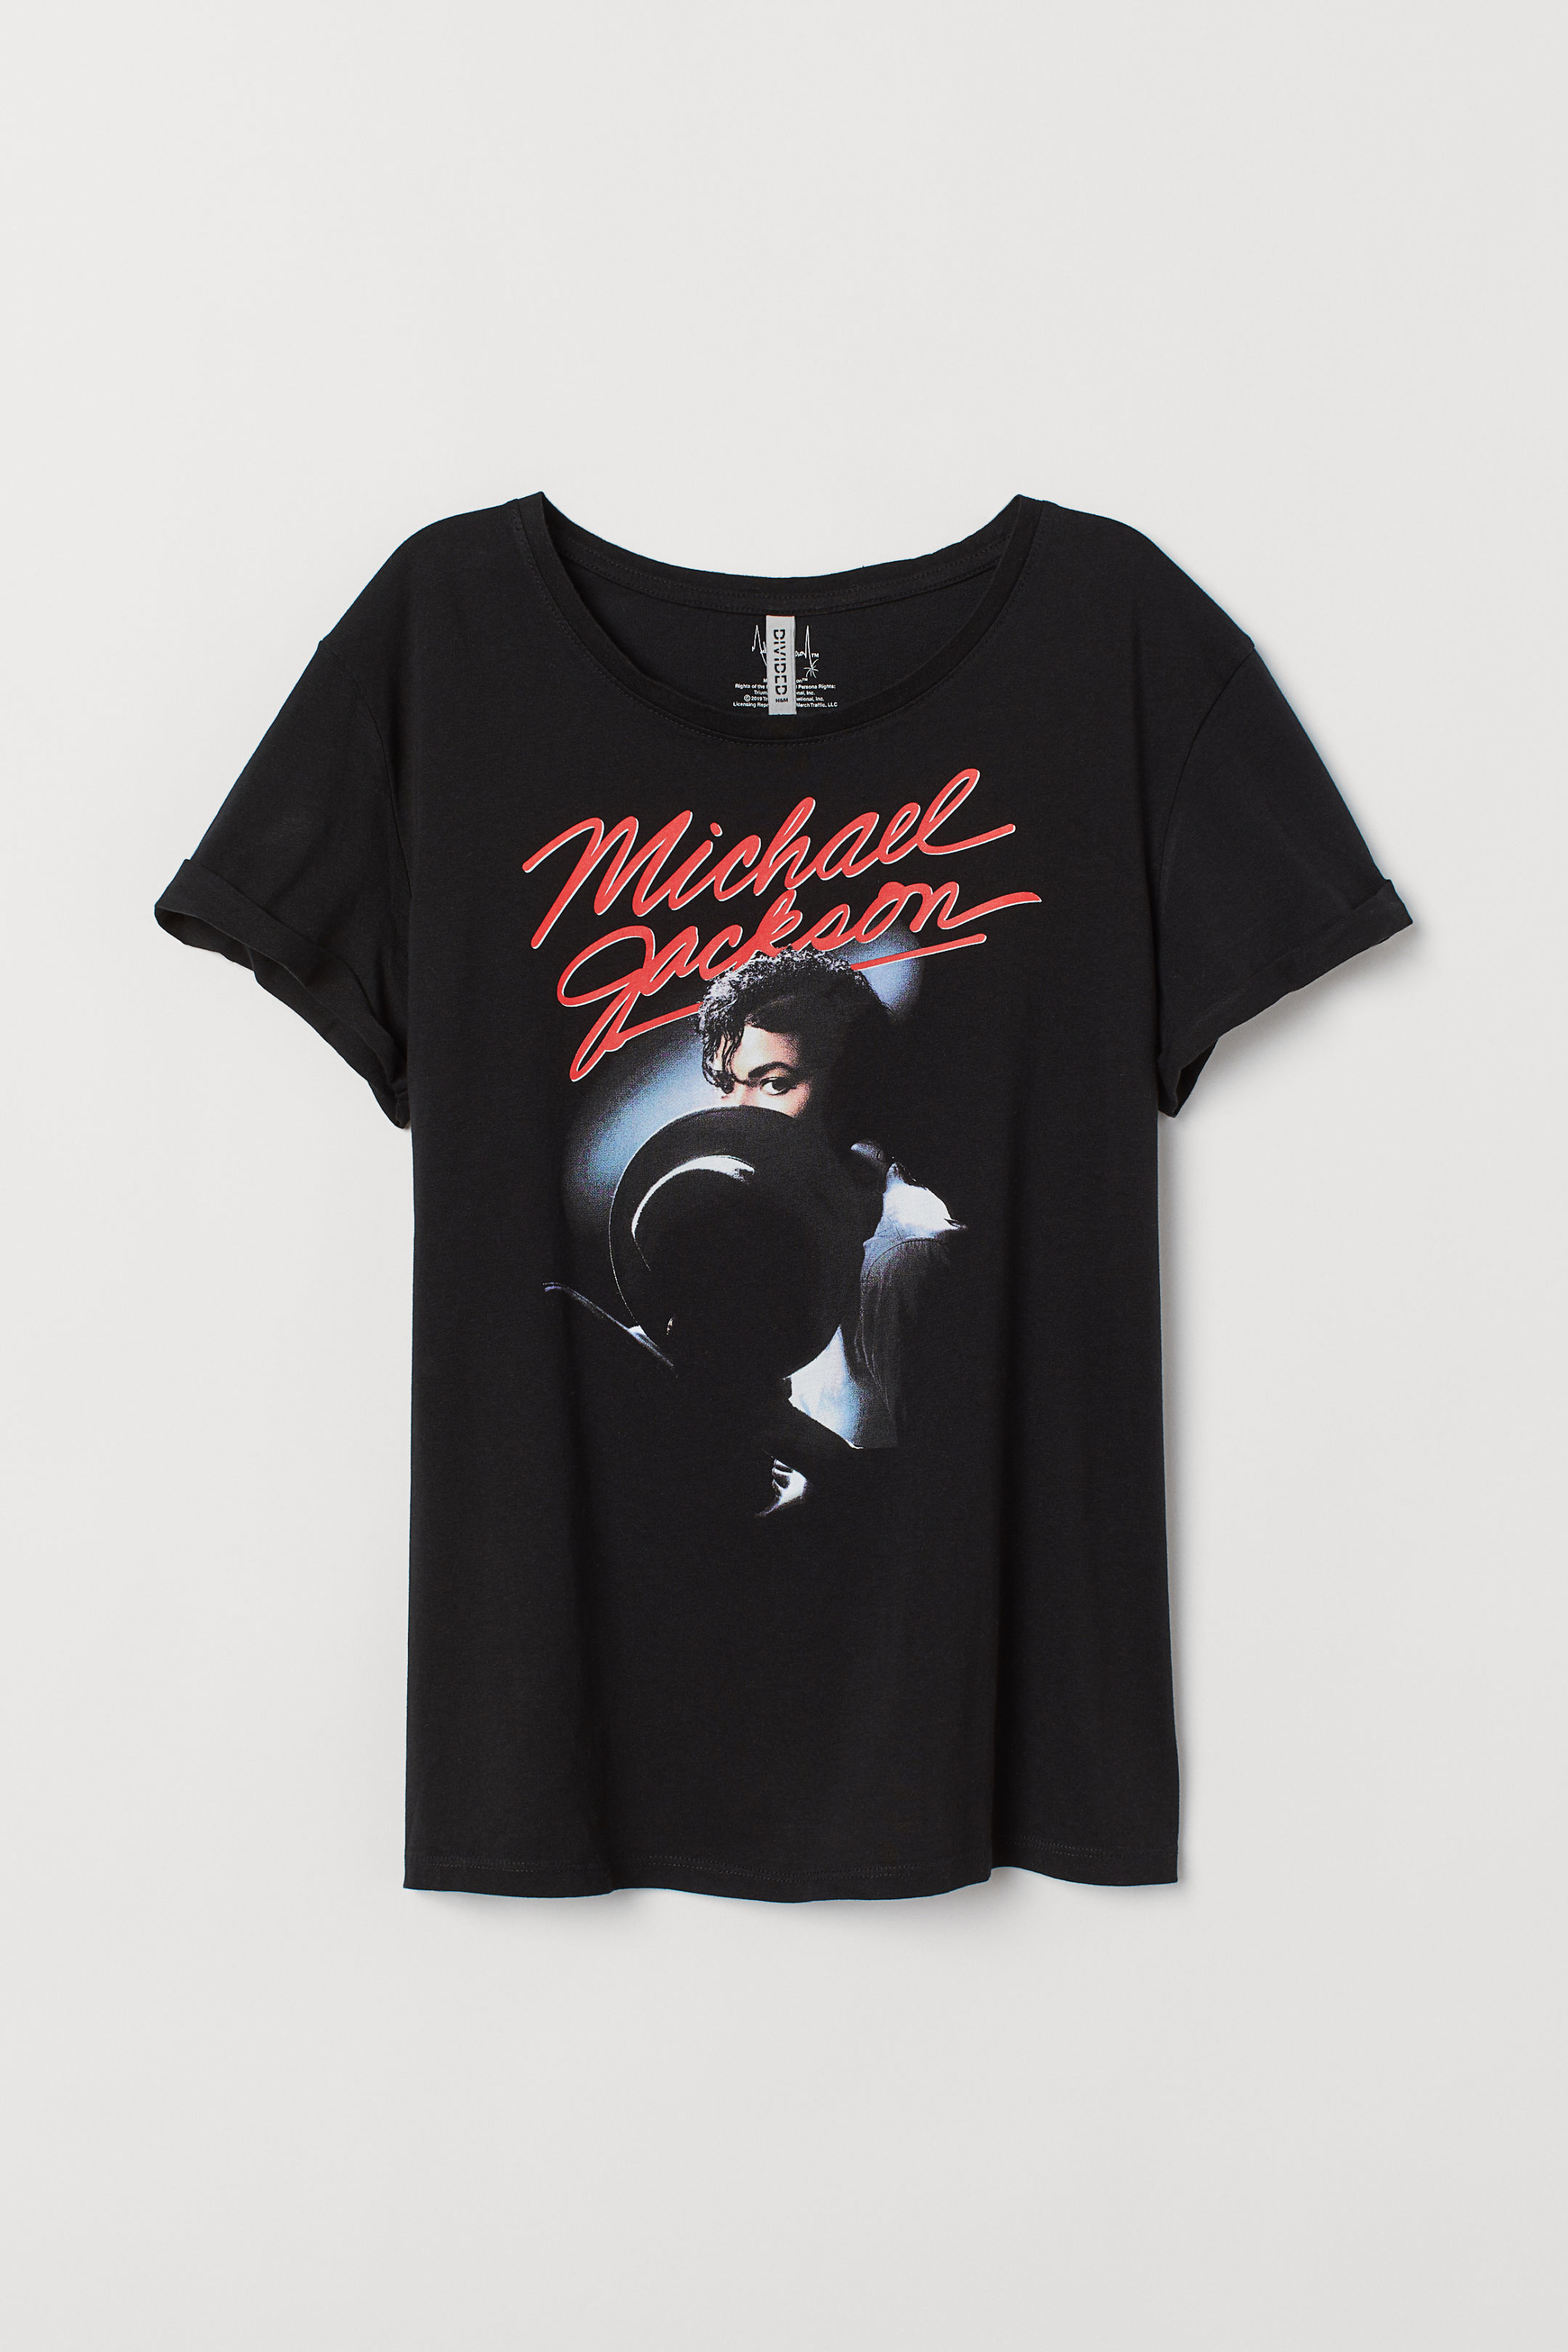 Retailer H&M has removed Michael Jackson's T-shirt. - MJVibe